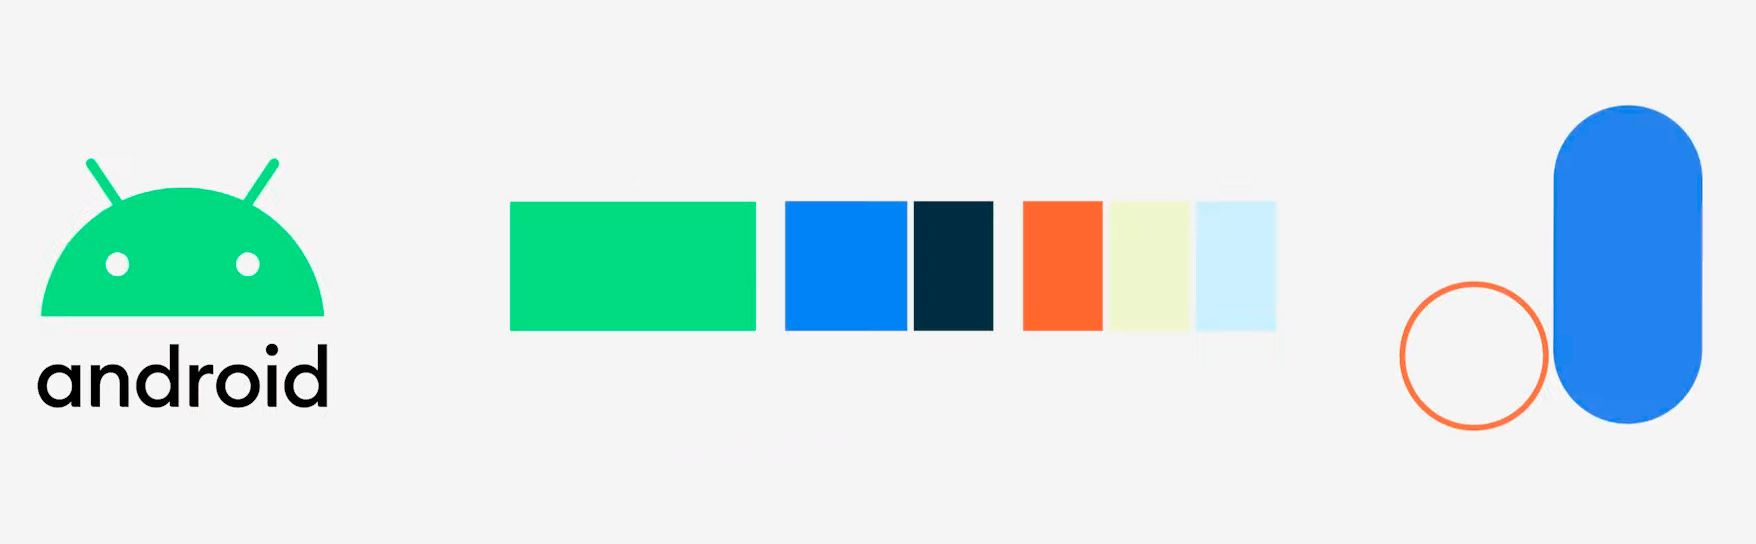 Android-10-paleta de colores